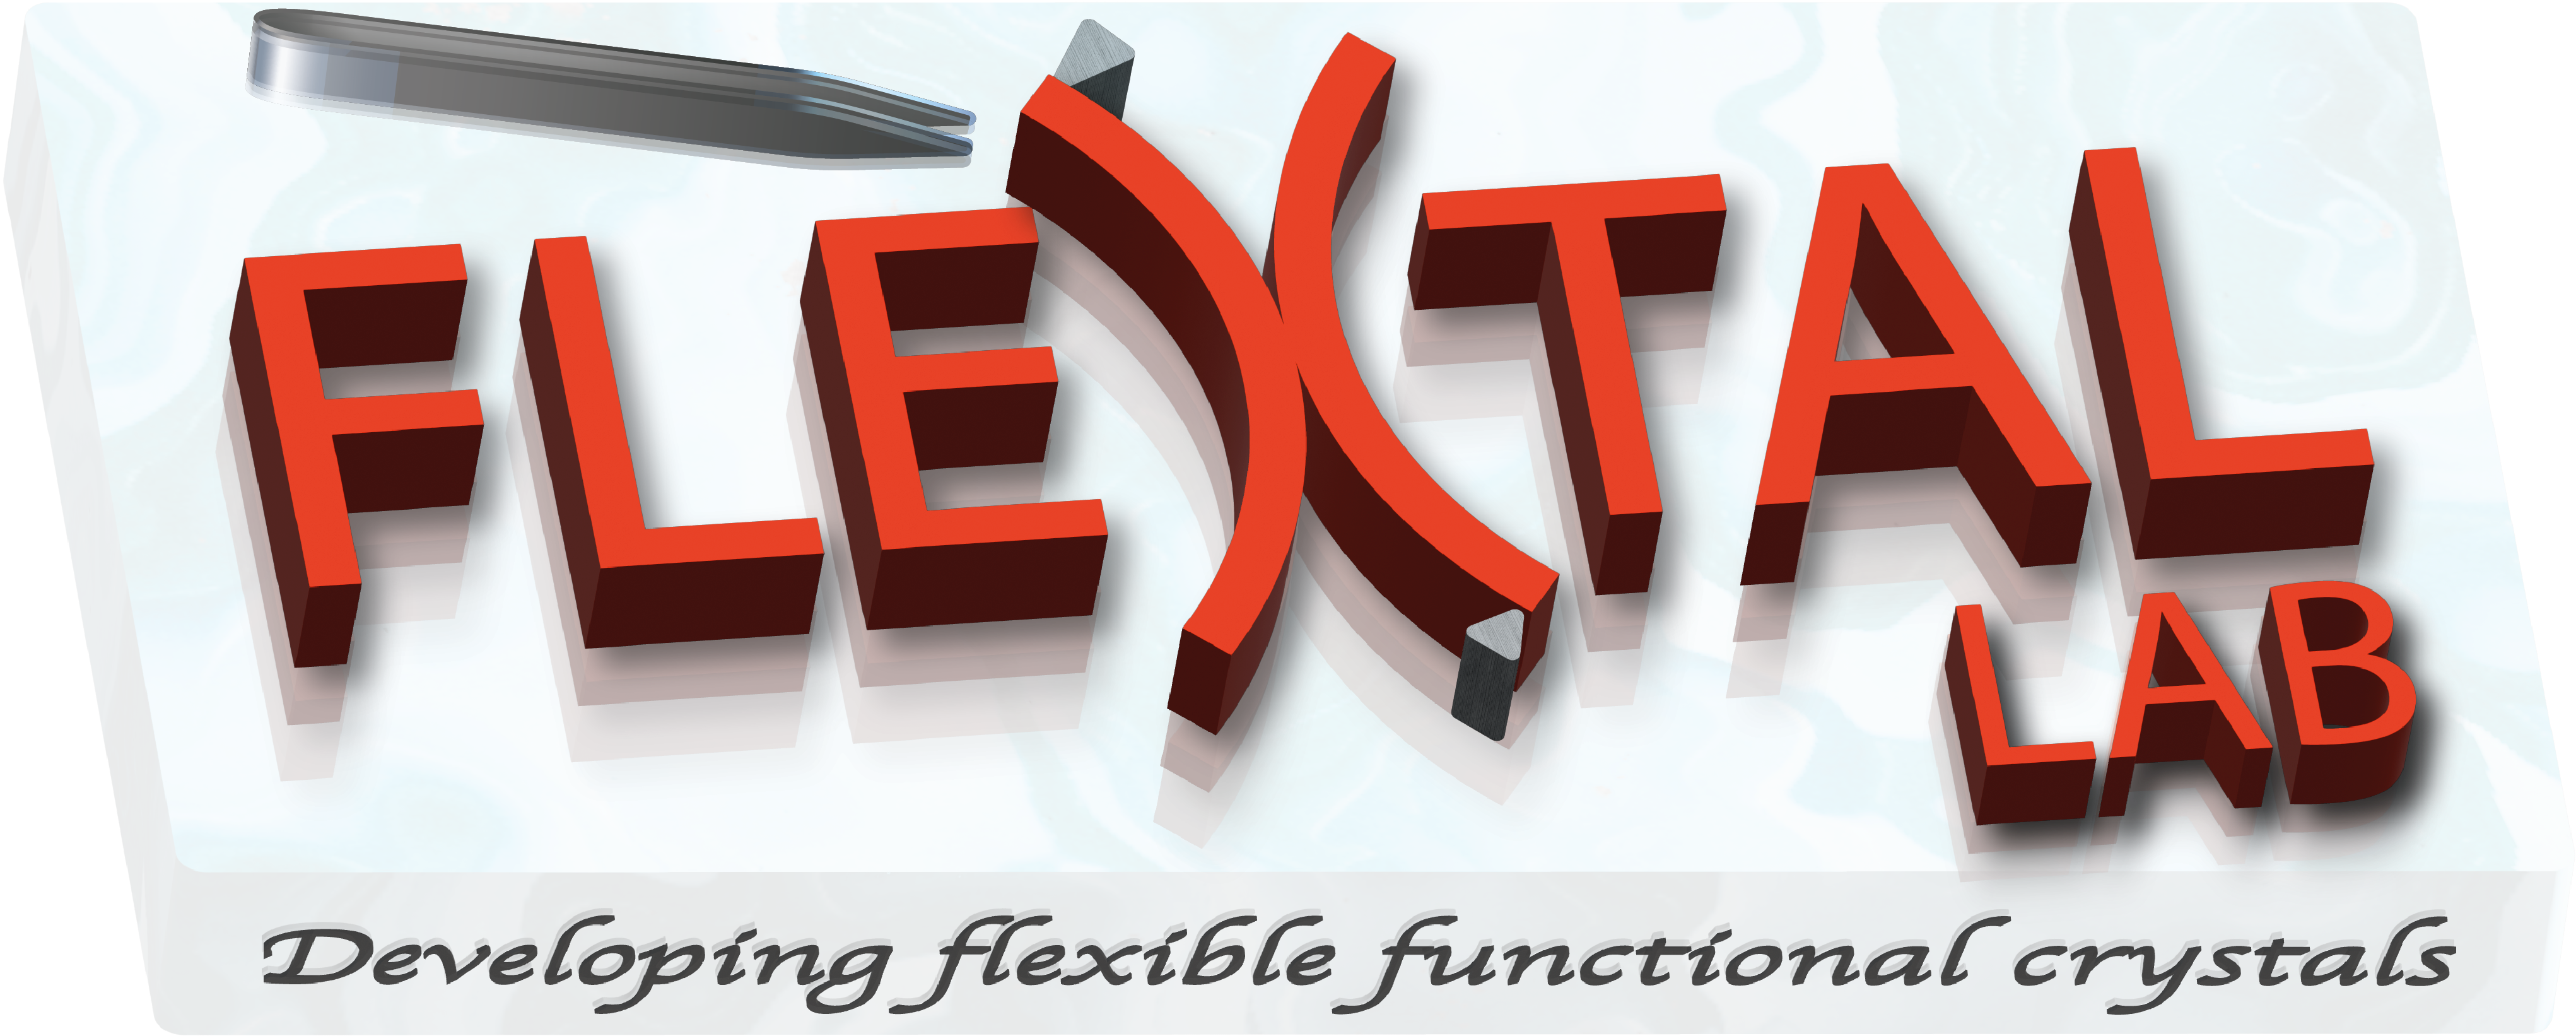 Flextal lab logo